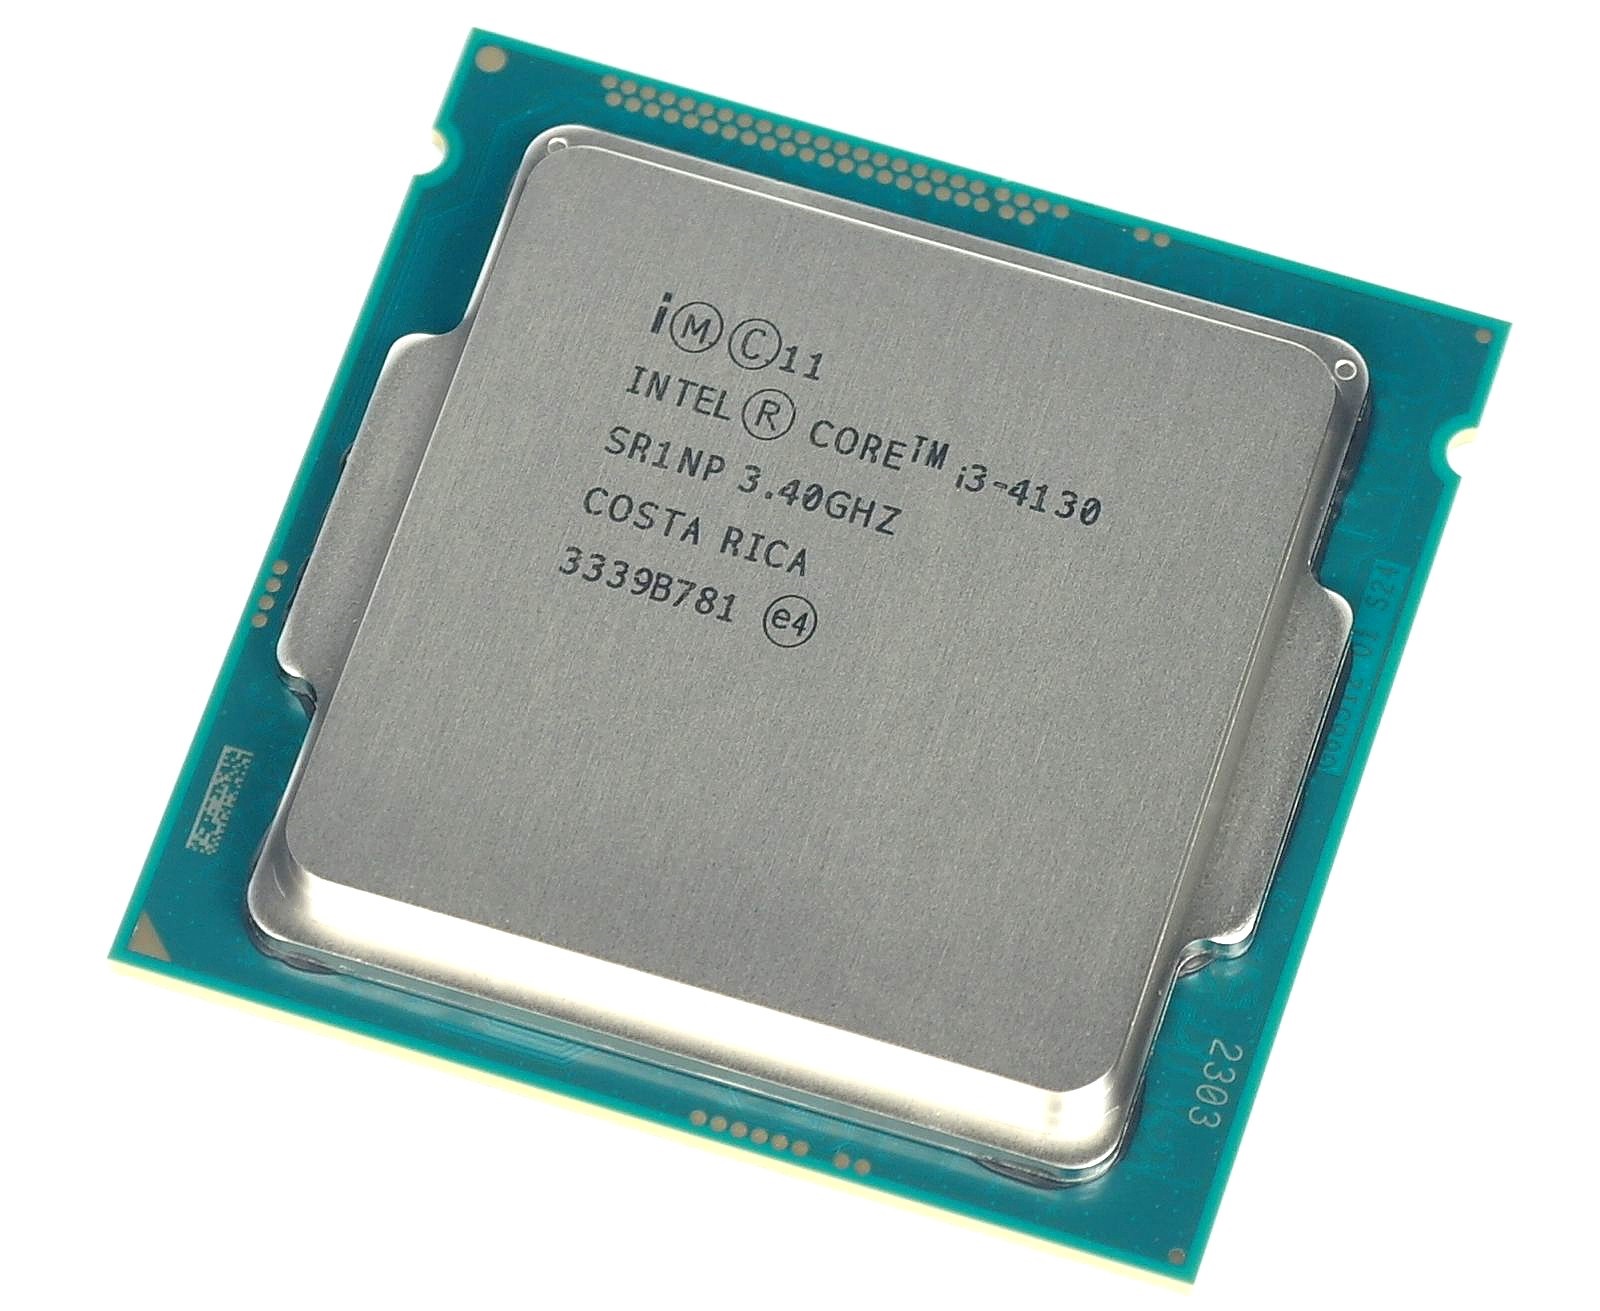 Intel core i3 какой сокет. Intel Celeron g1820. Процессор Intel Celeron g1840 OEM. Intel Celeron 2.70GHZ. Процессор Intel Celeron g1850 Haswell.